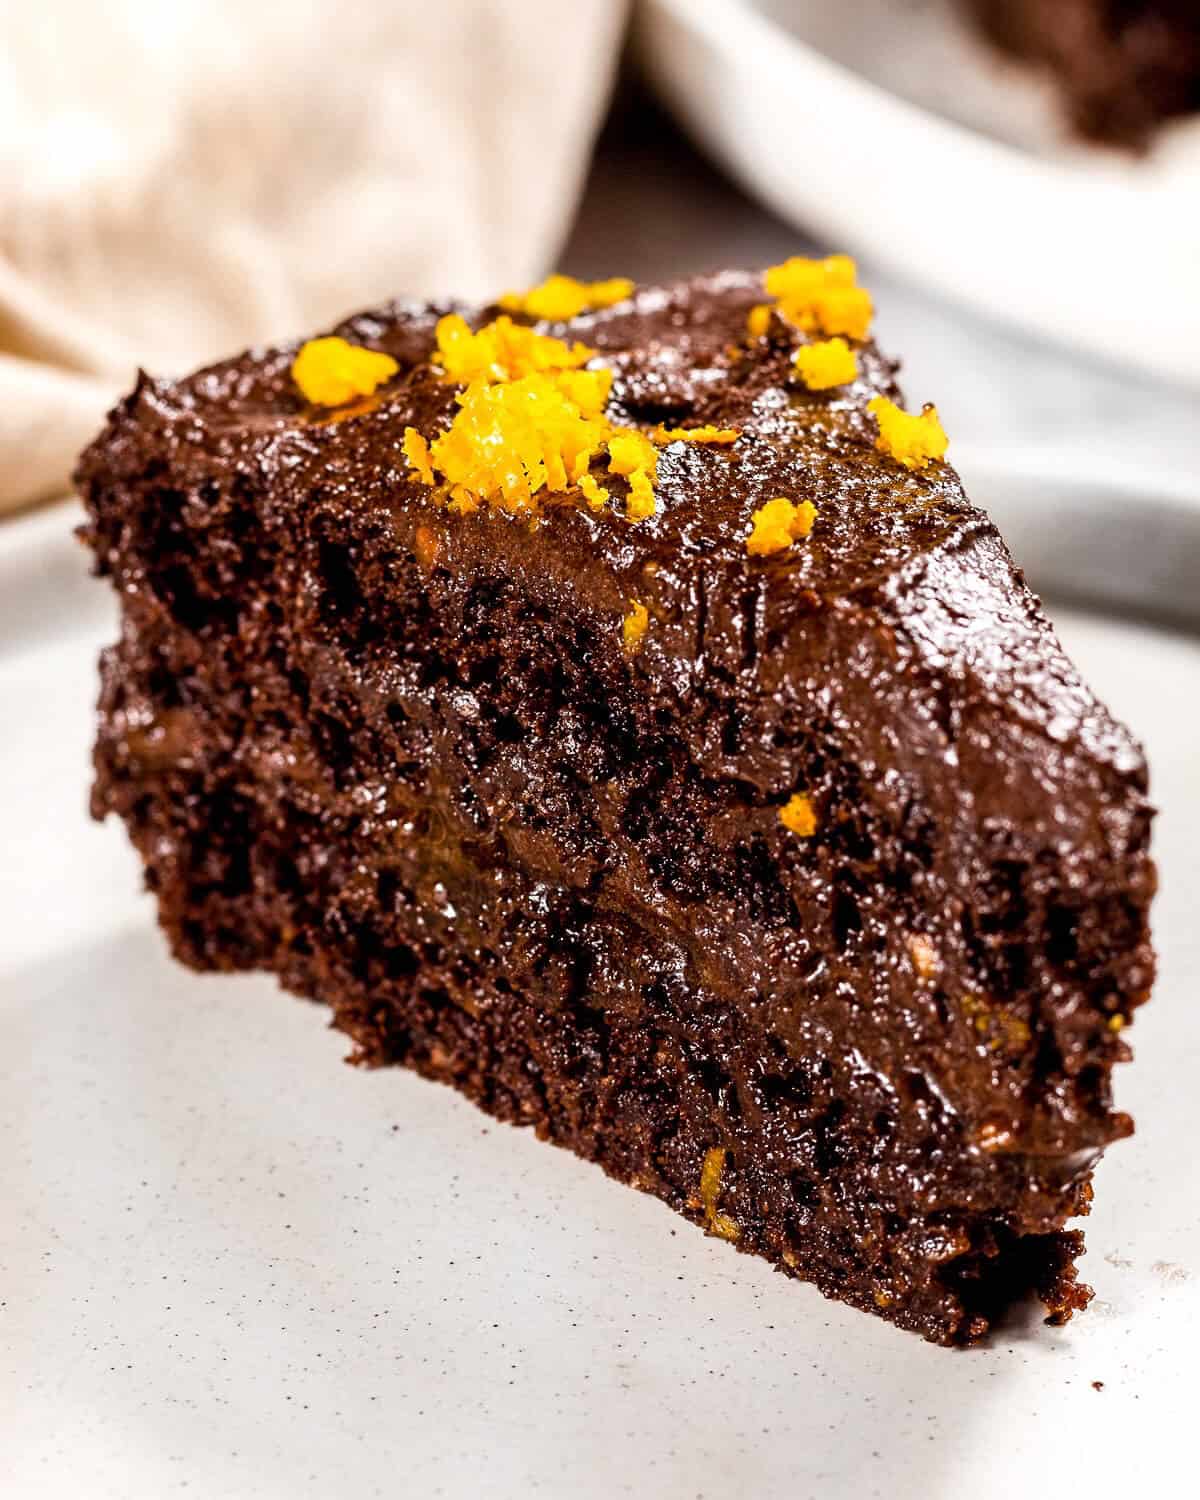 A close up image of chocolate orange cake.